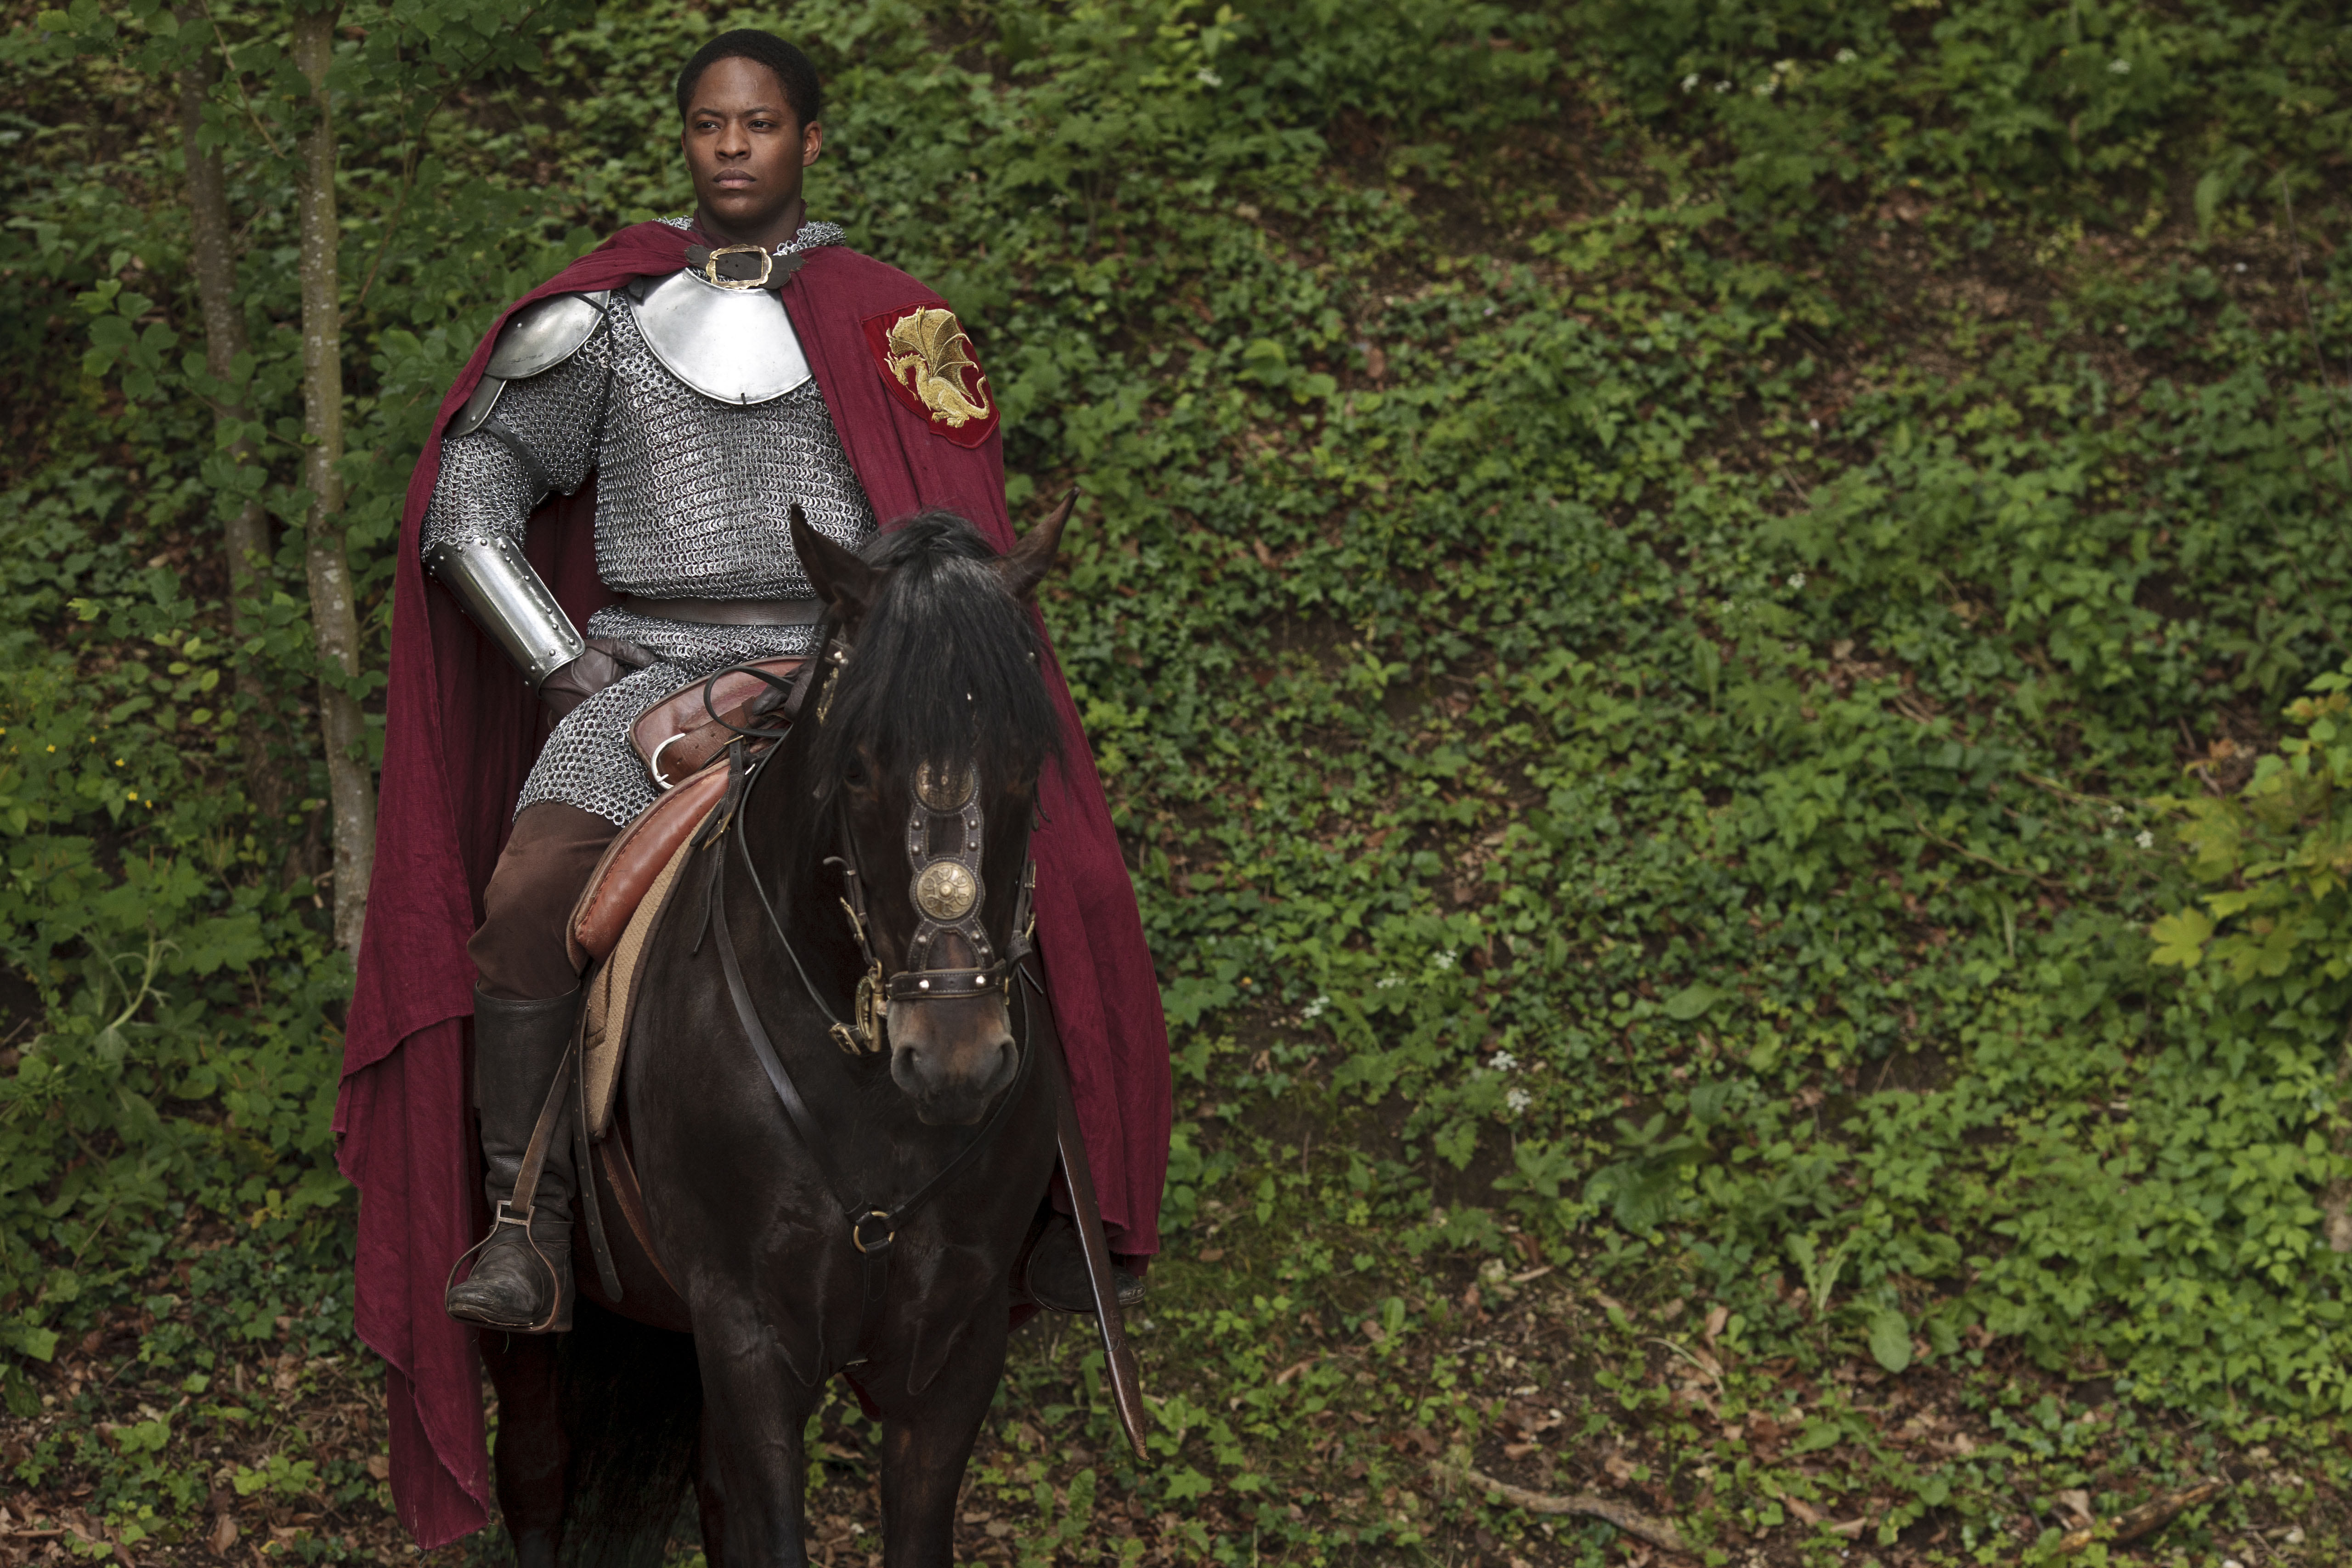 Merlin Family Drama Fantasy Adventure Television Warrior Armor Knight